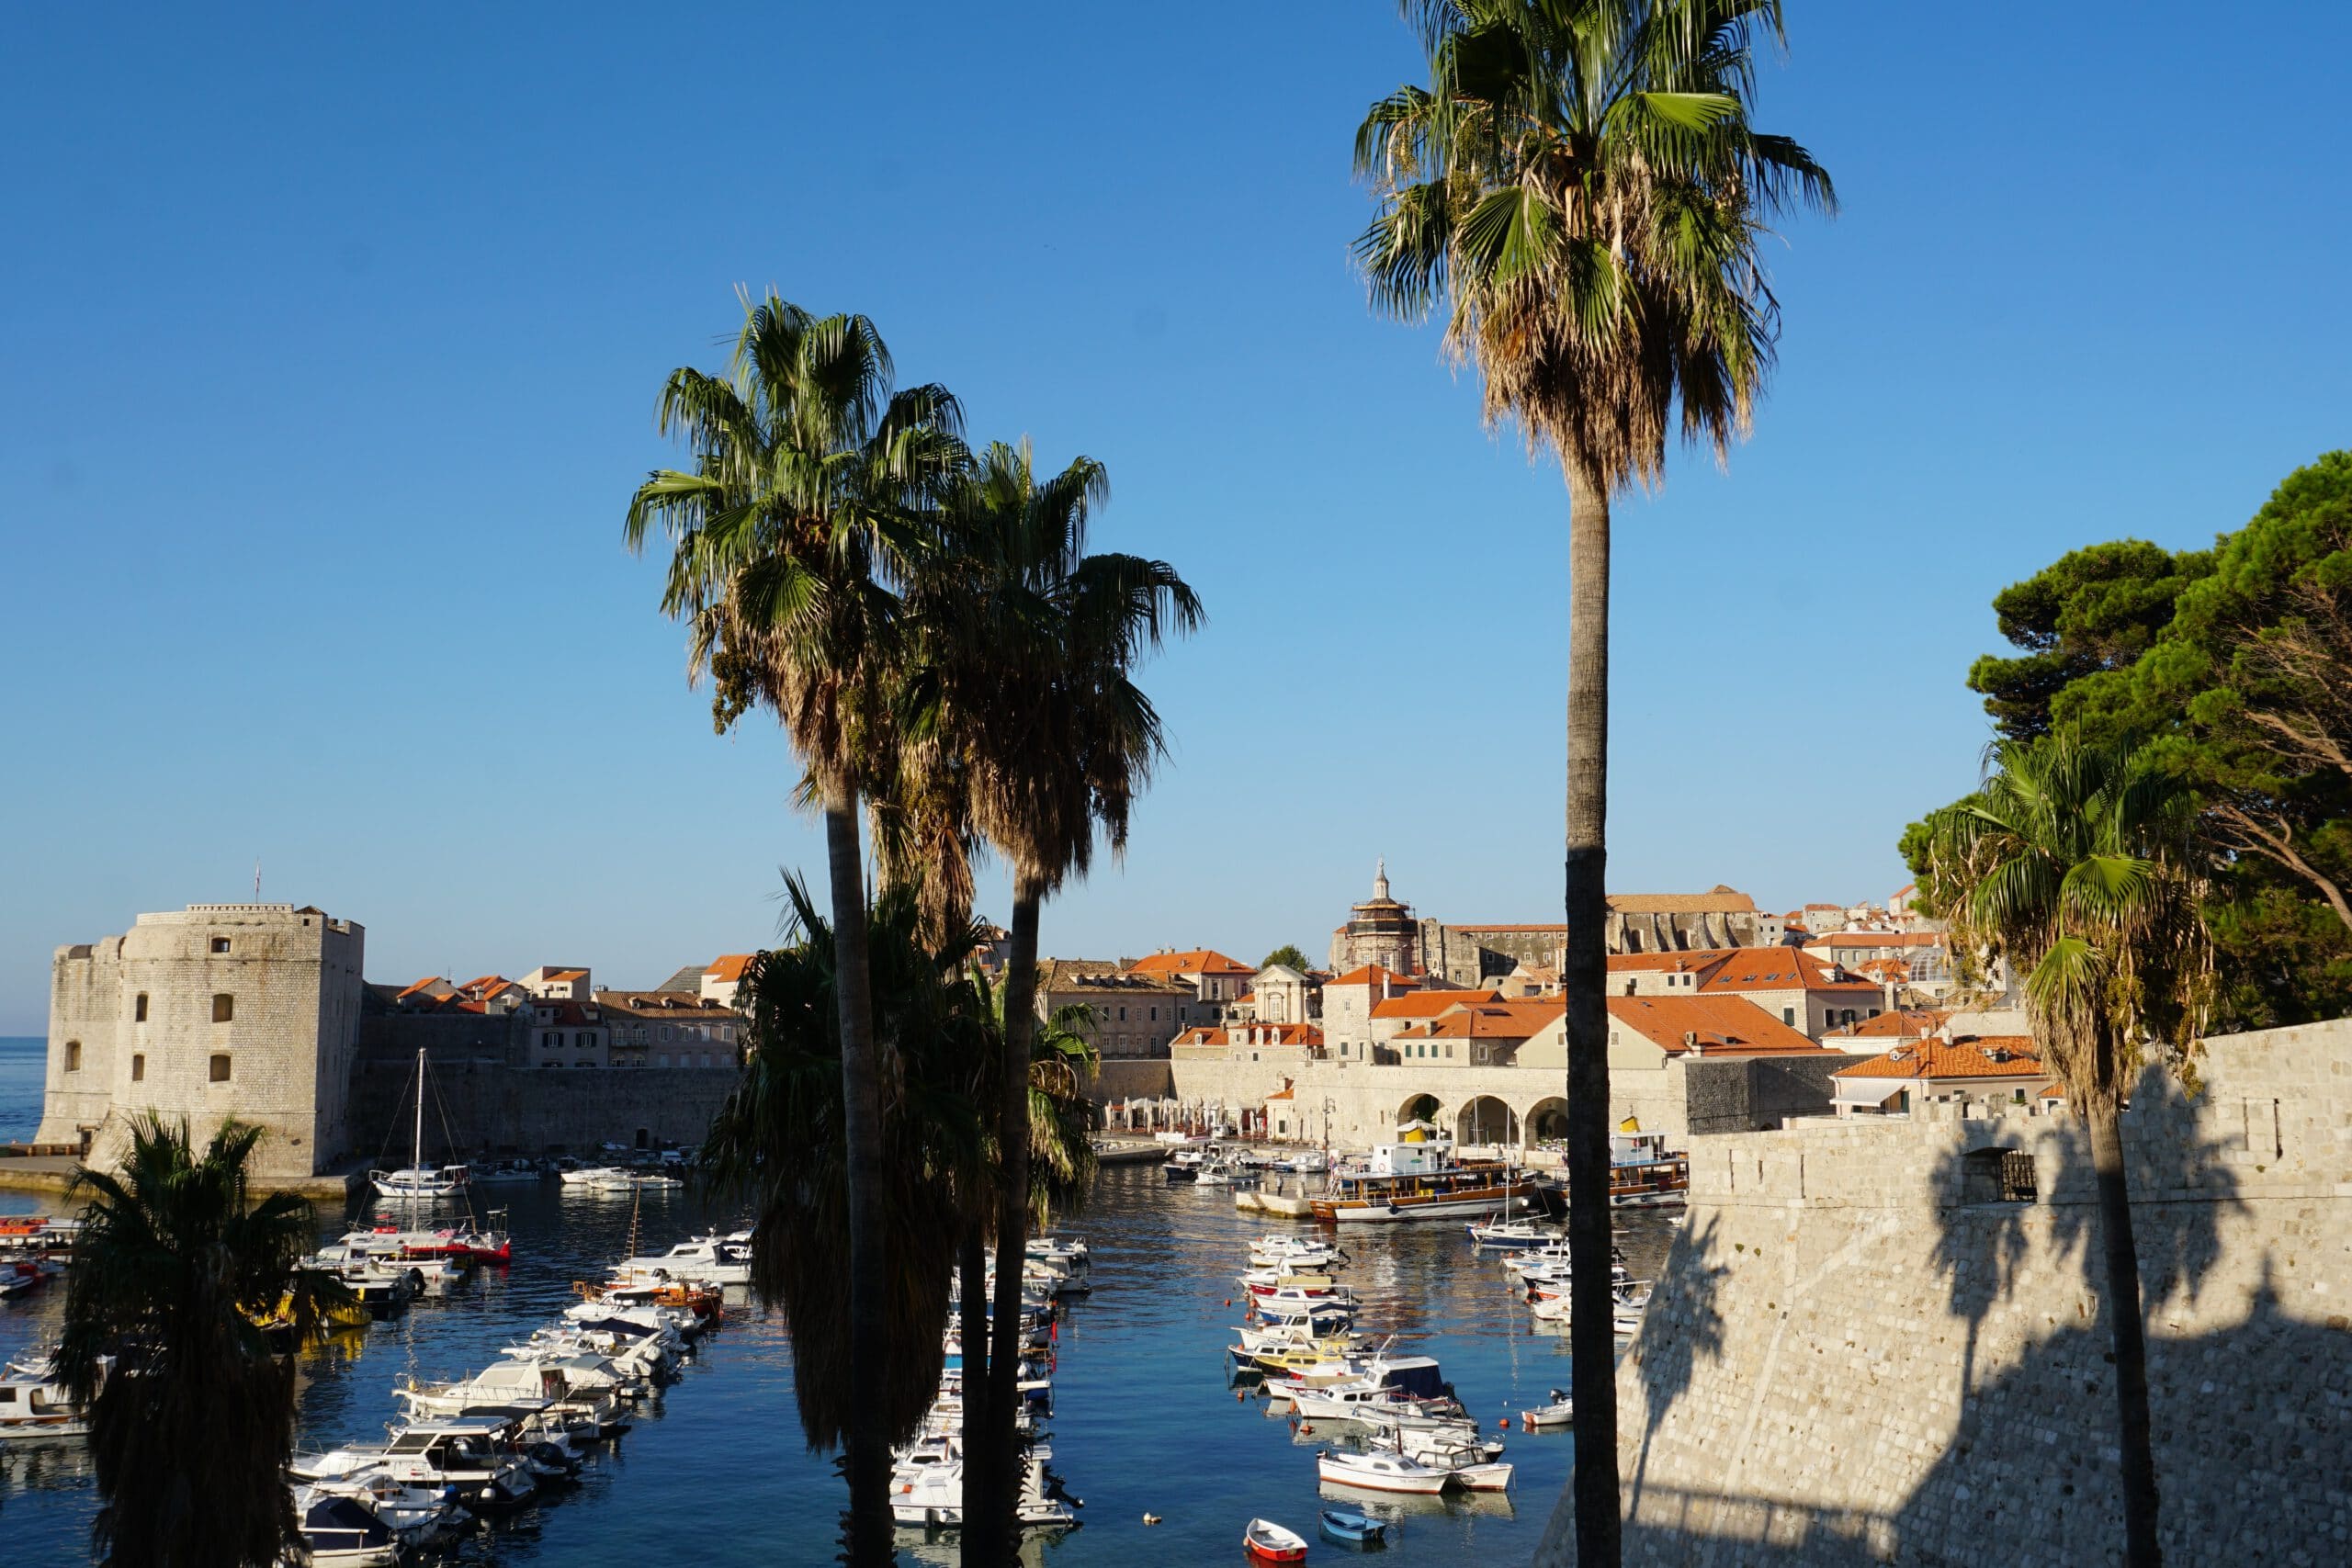 kroatie-dubrovnik-haventje-palmbomen-gebouwen-zee